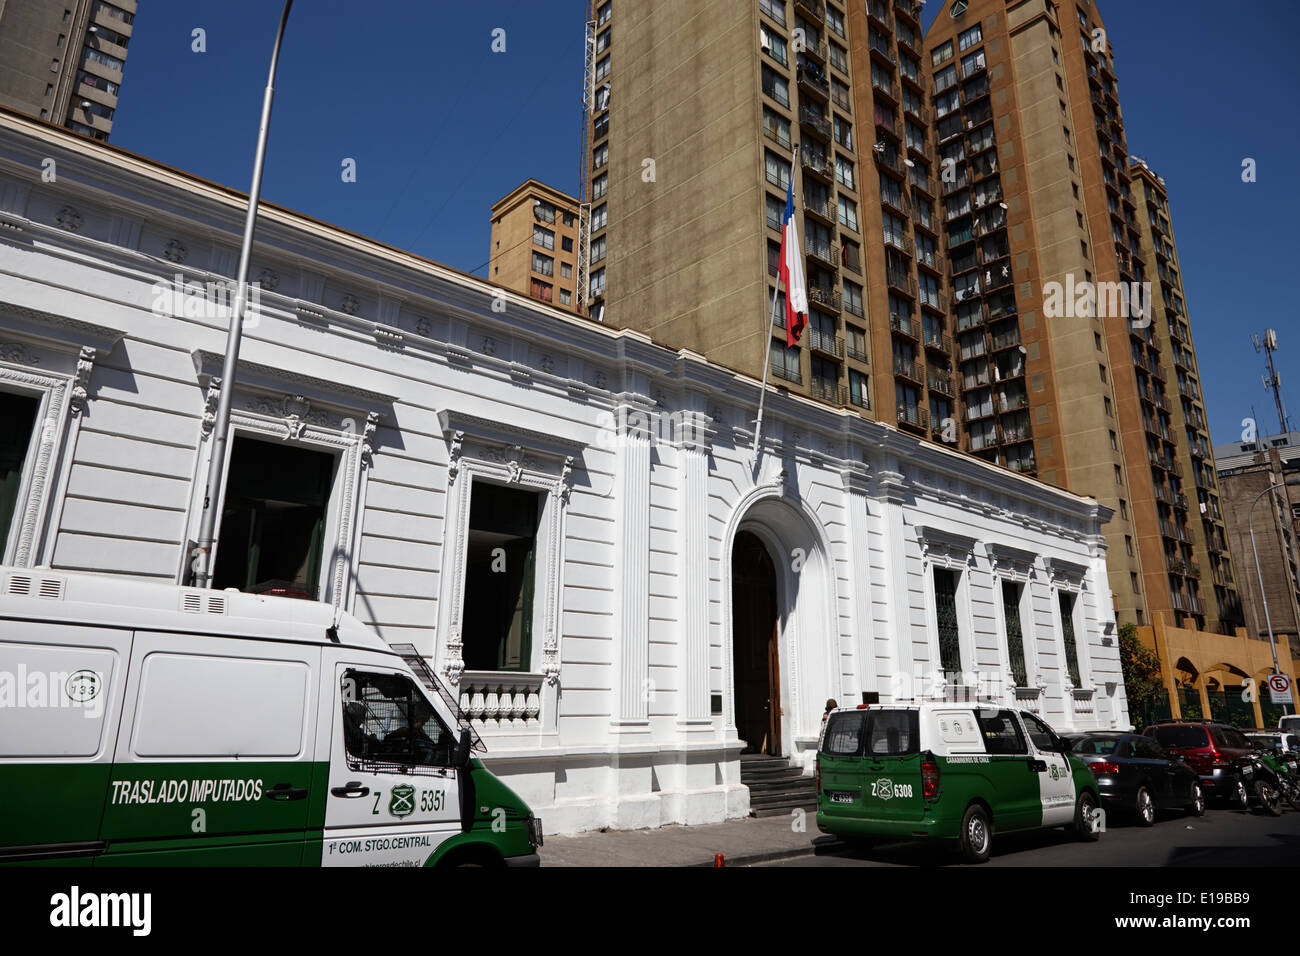 Les carabiniers du Chili primera comisaria police nationale Santiago Chili Banque D'Images